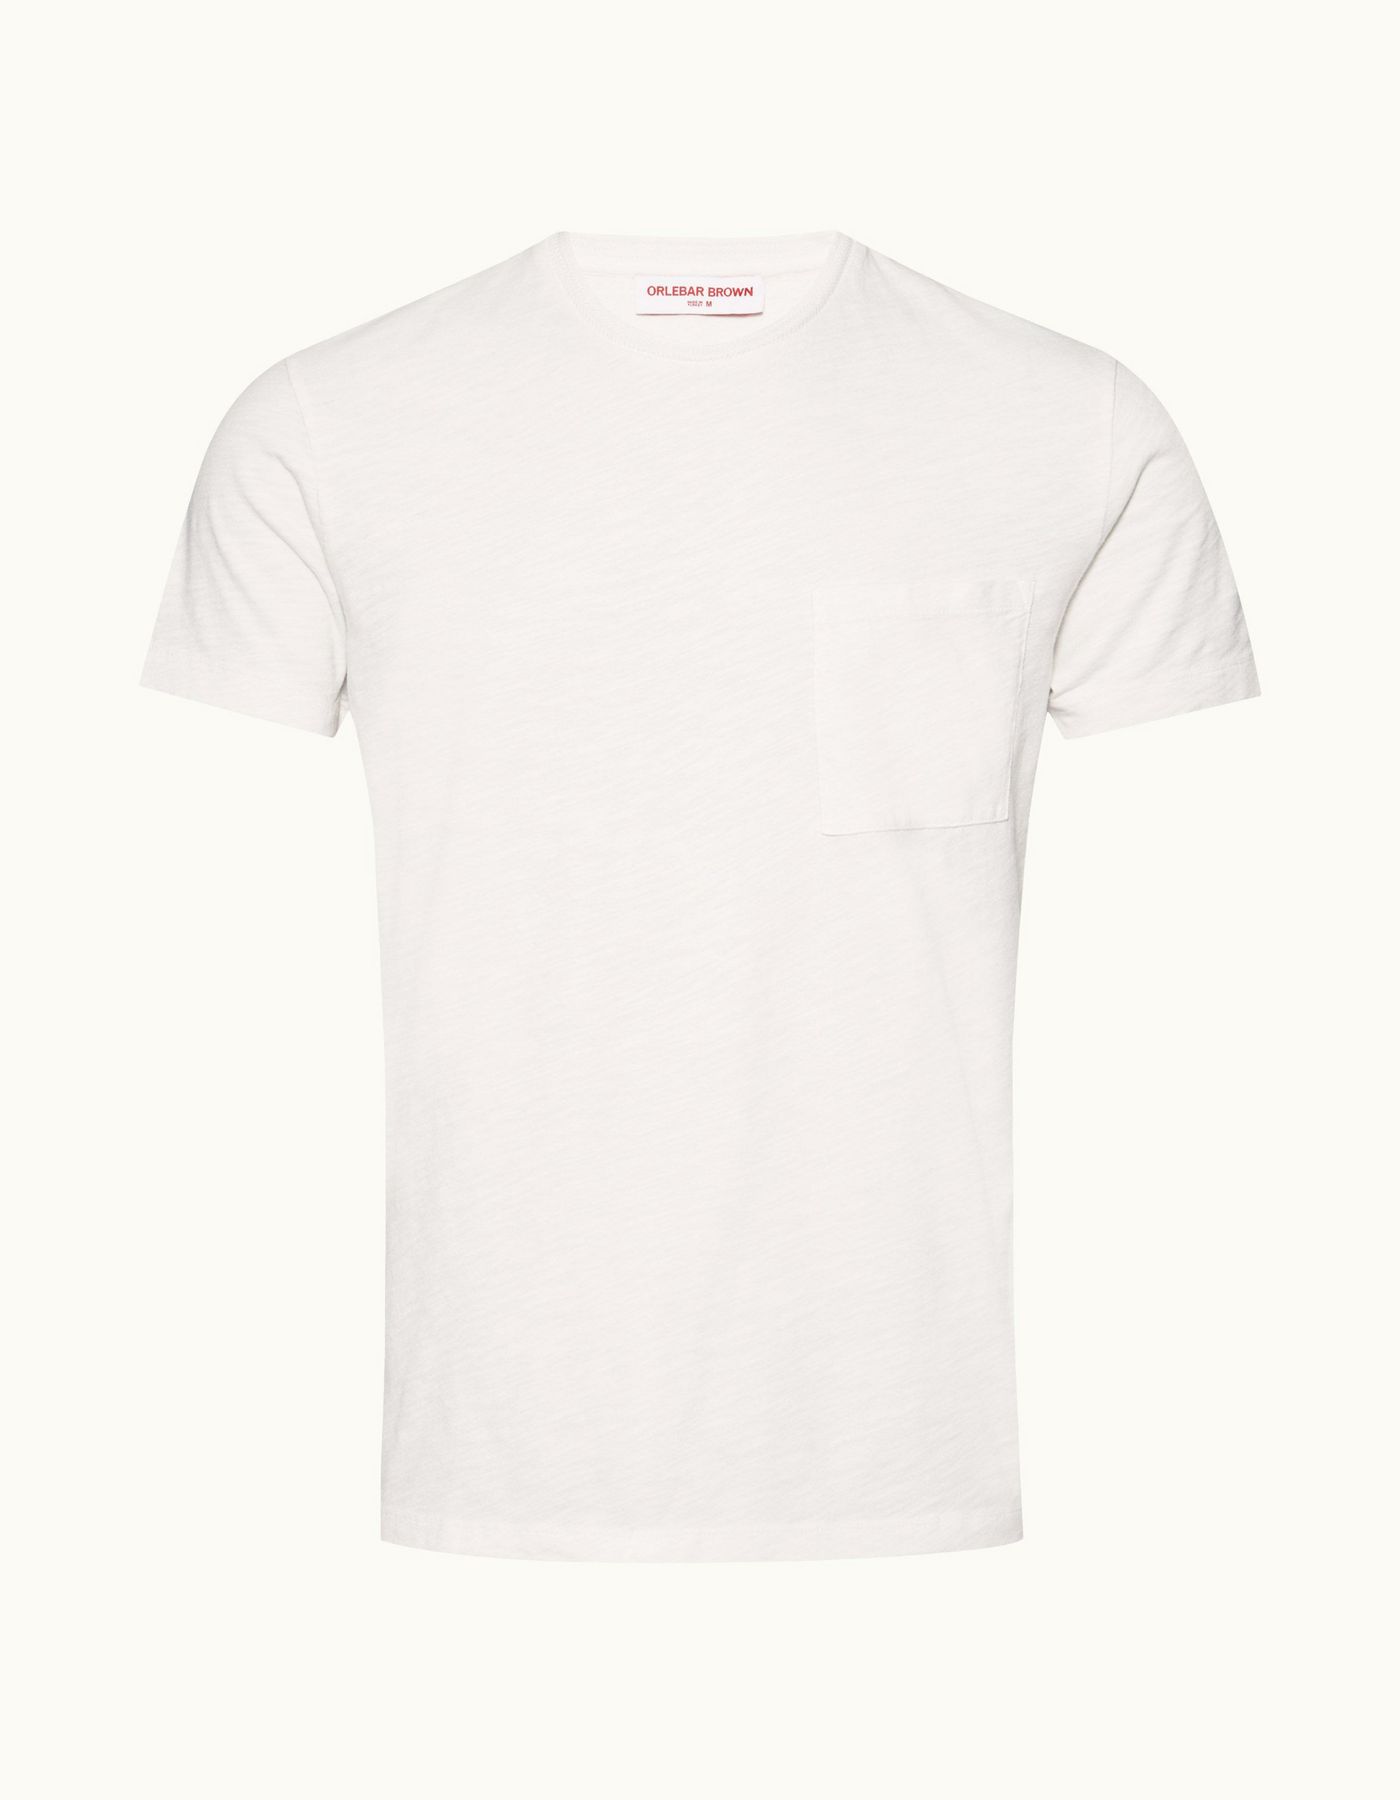 Sammy - Mens White Sand Classic Fit Garment Dye Cotton T-shirt